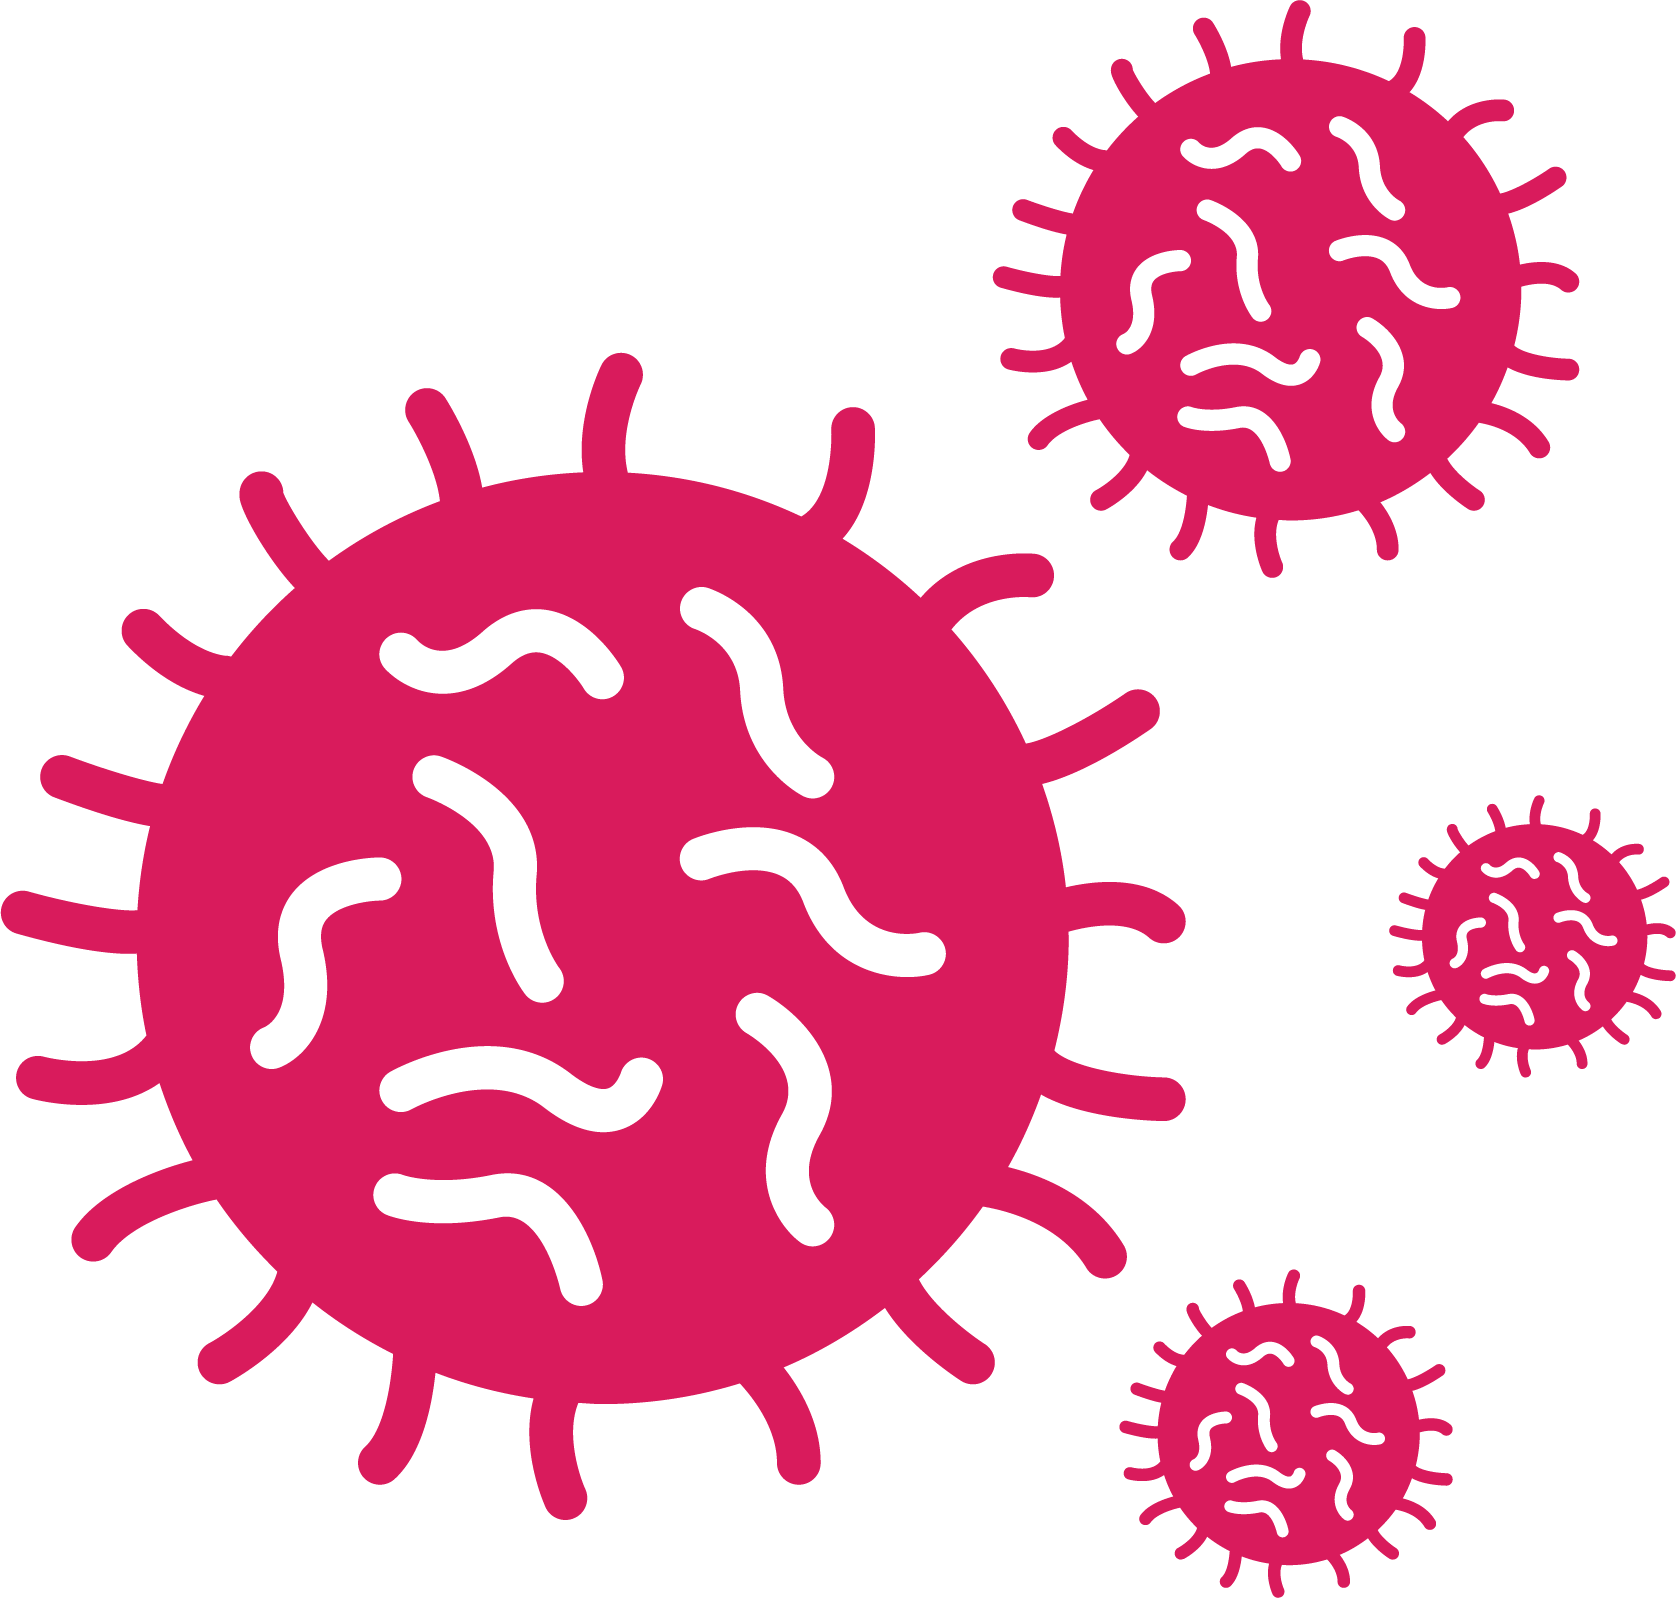 Virus js. Вирус ковид. Векторный вирус. Вирус схематично. Изображение вируса.